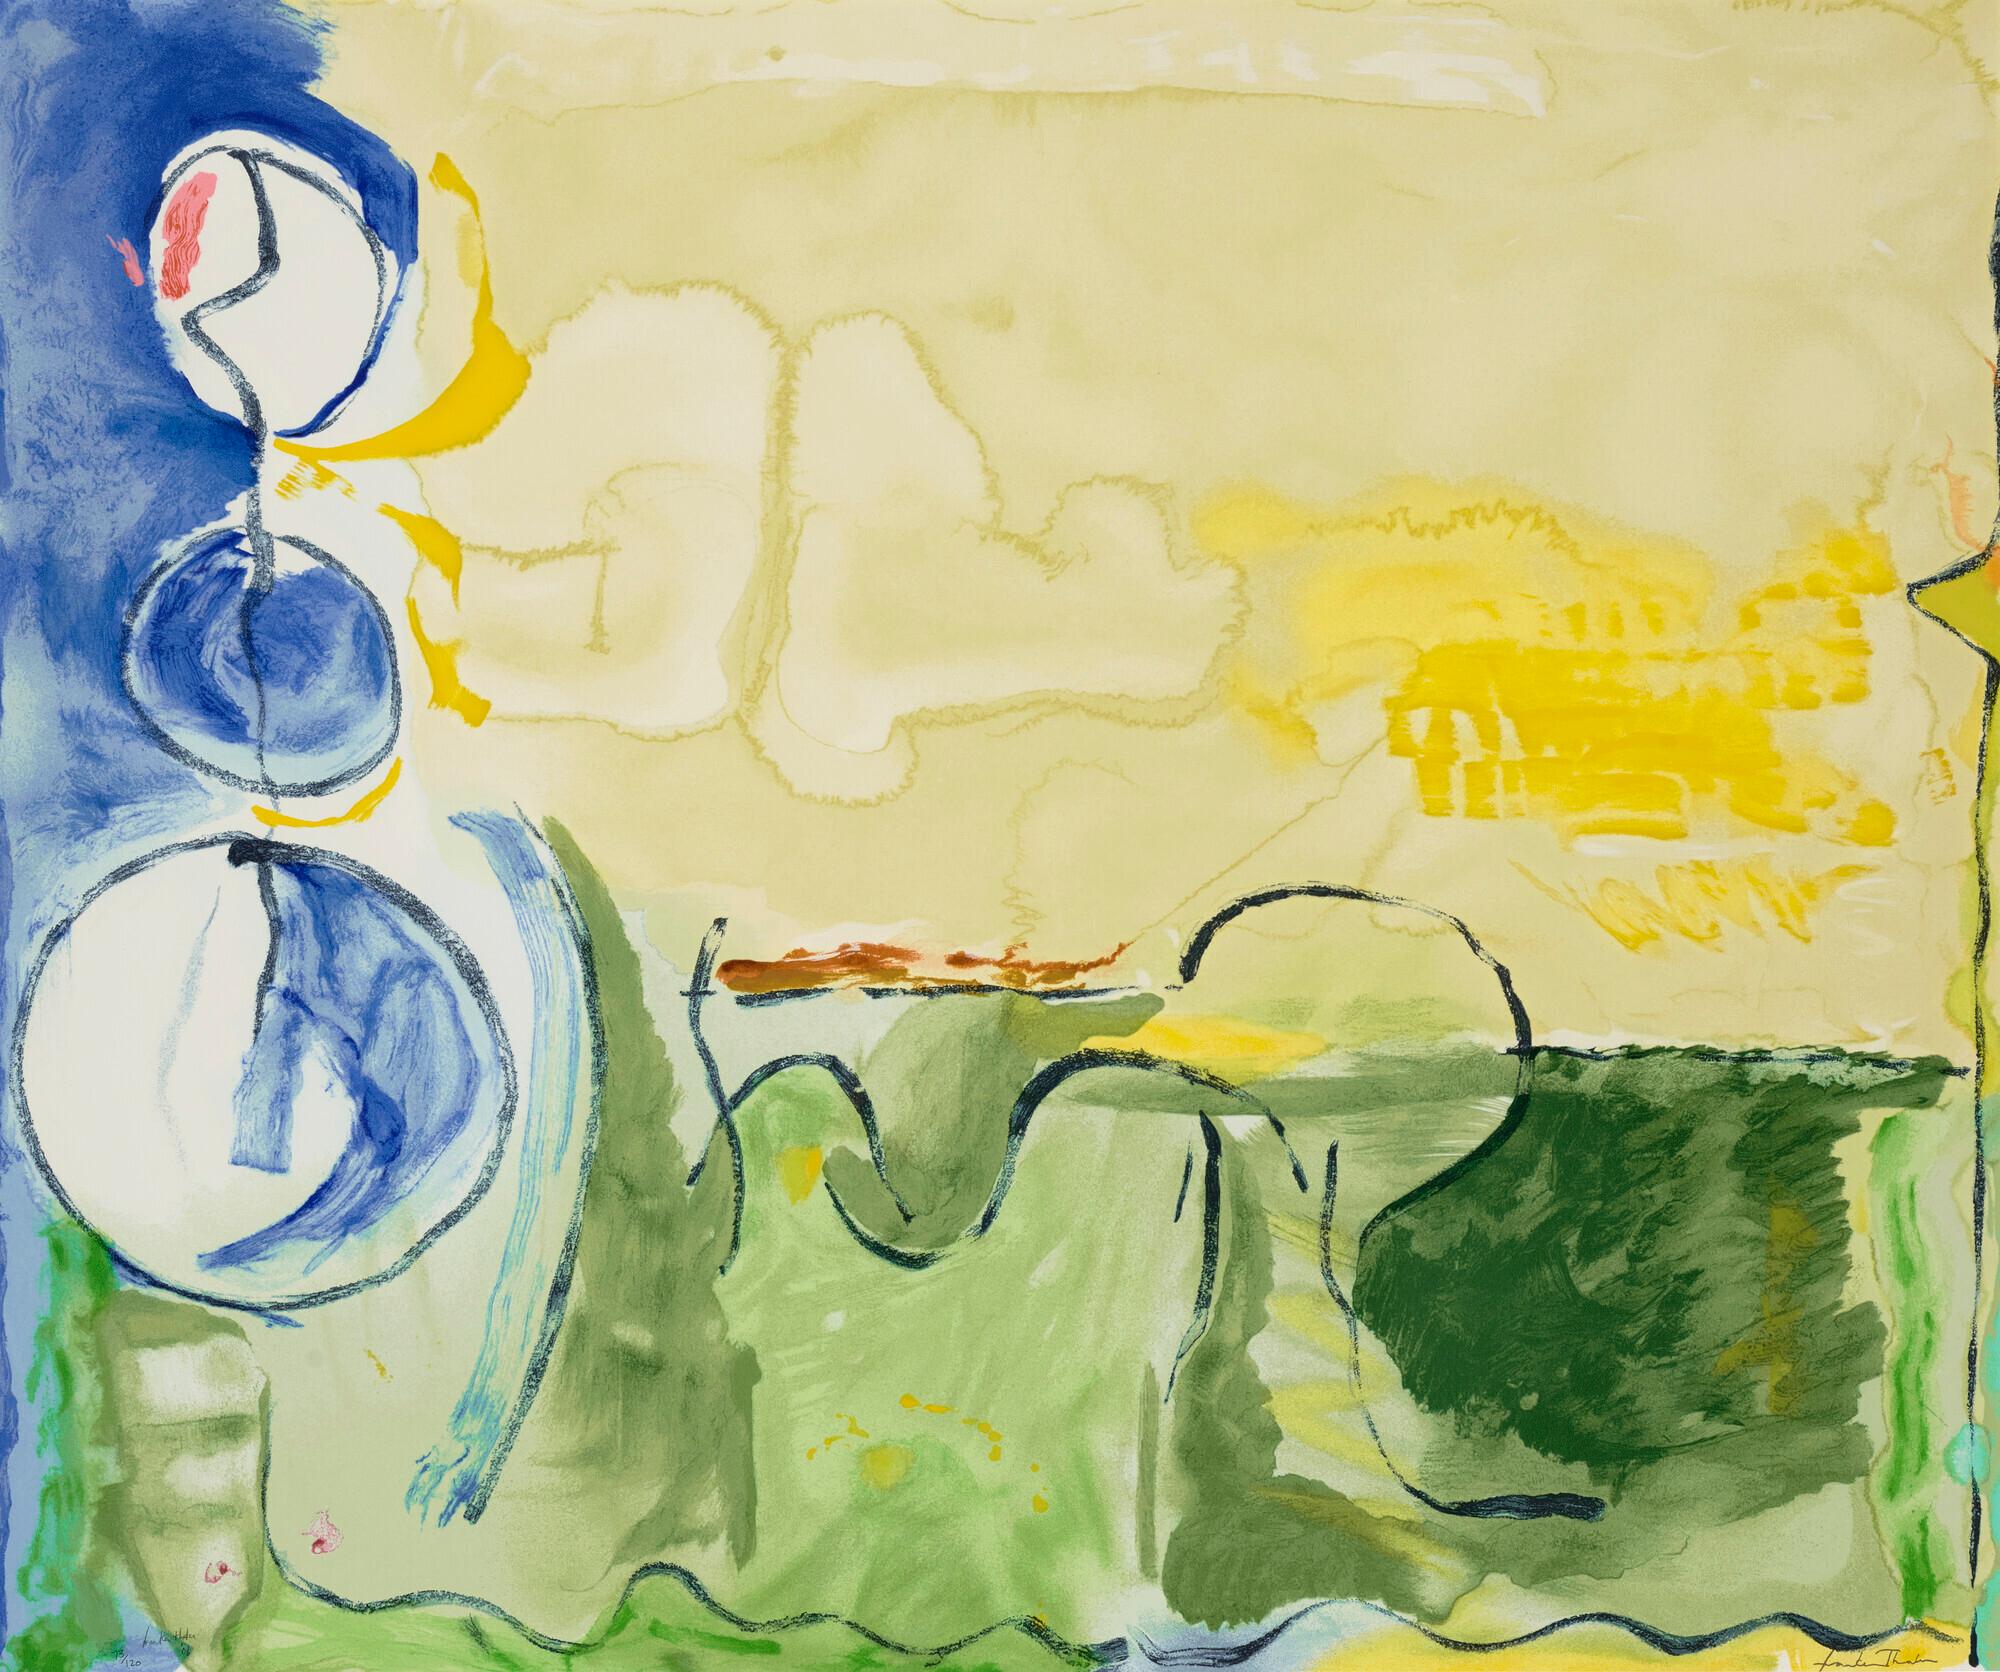 What technique did Helen Frankenthaler use?